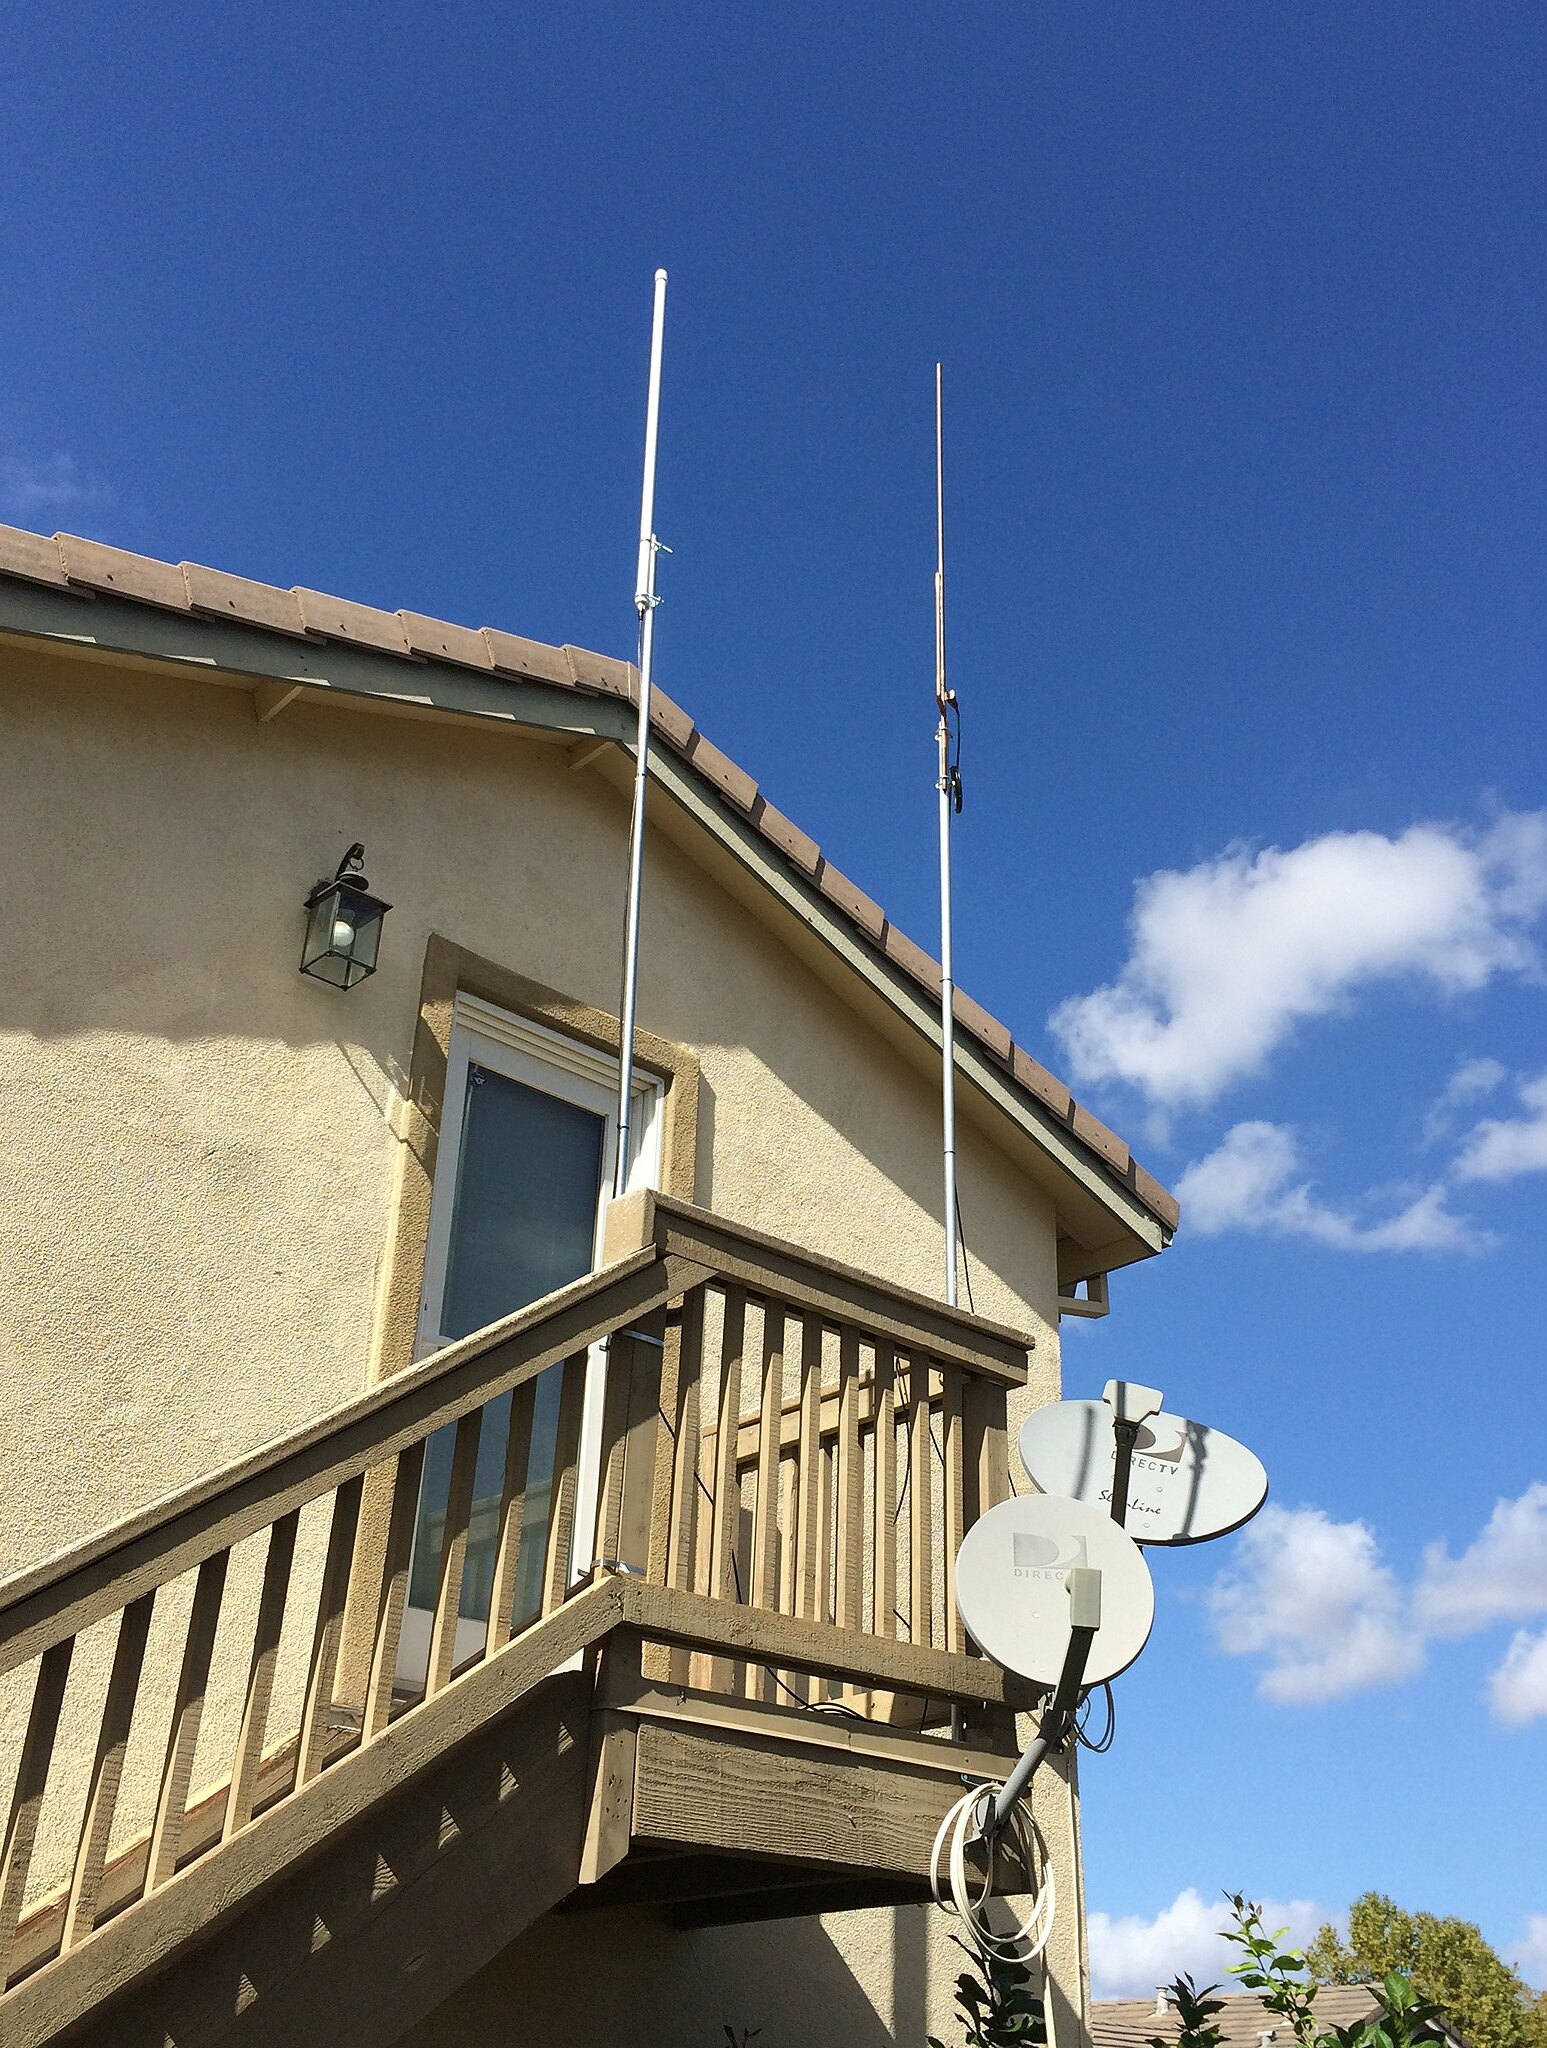 Station W6SAE Antennas